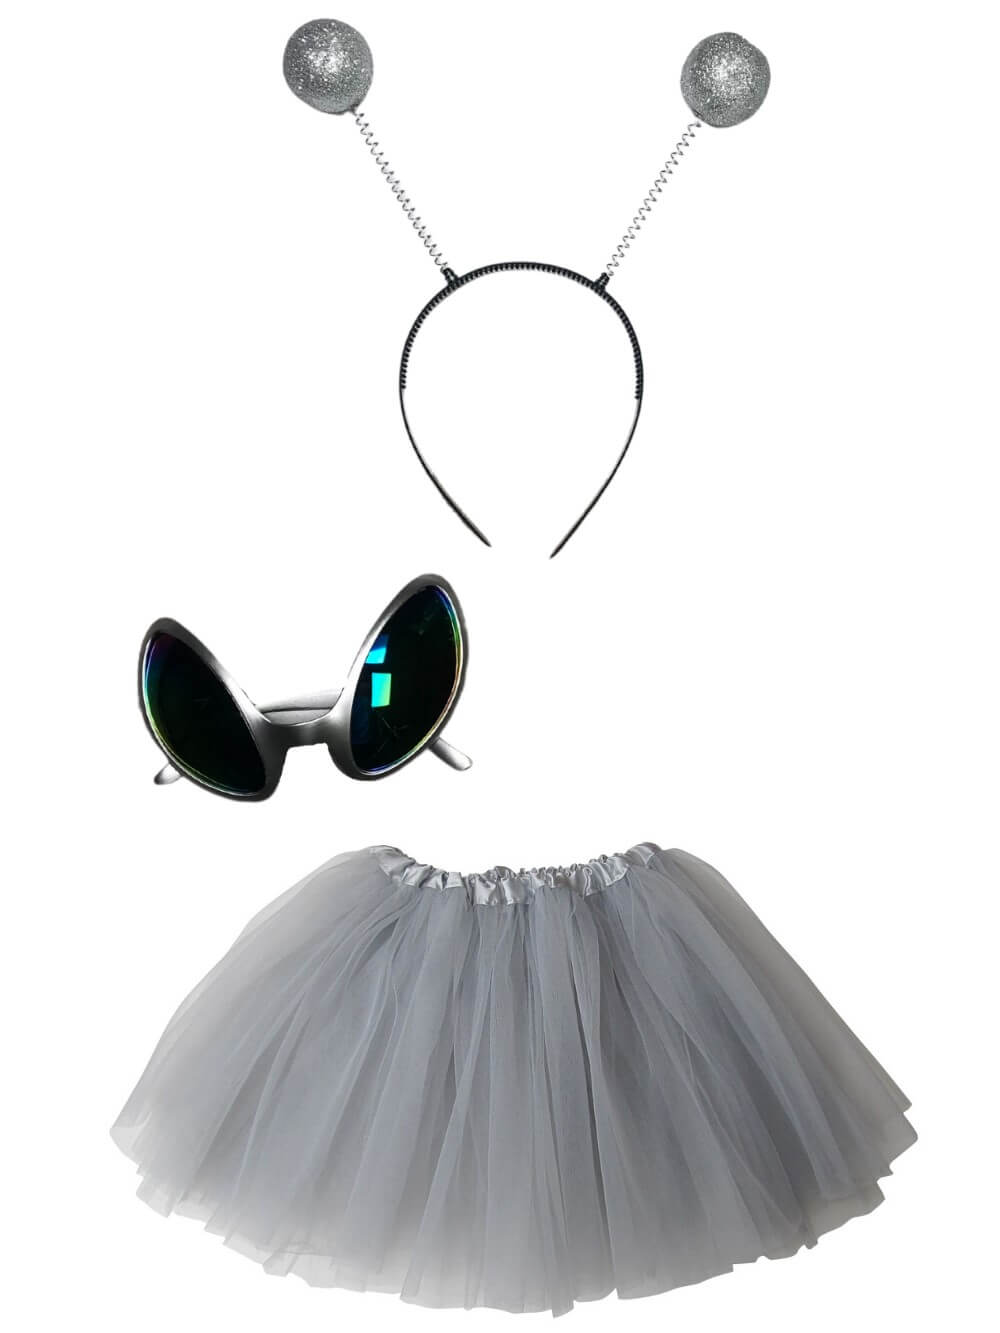 Adult Alien Costume Silver - Tutu Skirt, Sunglasses, & Headband Set for Adult or Plus Size - Sydney So Sweet